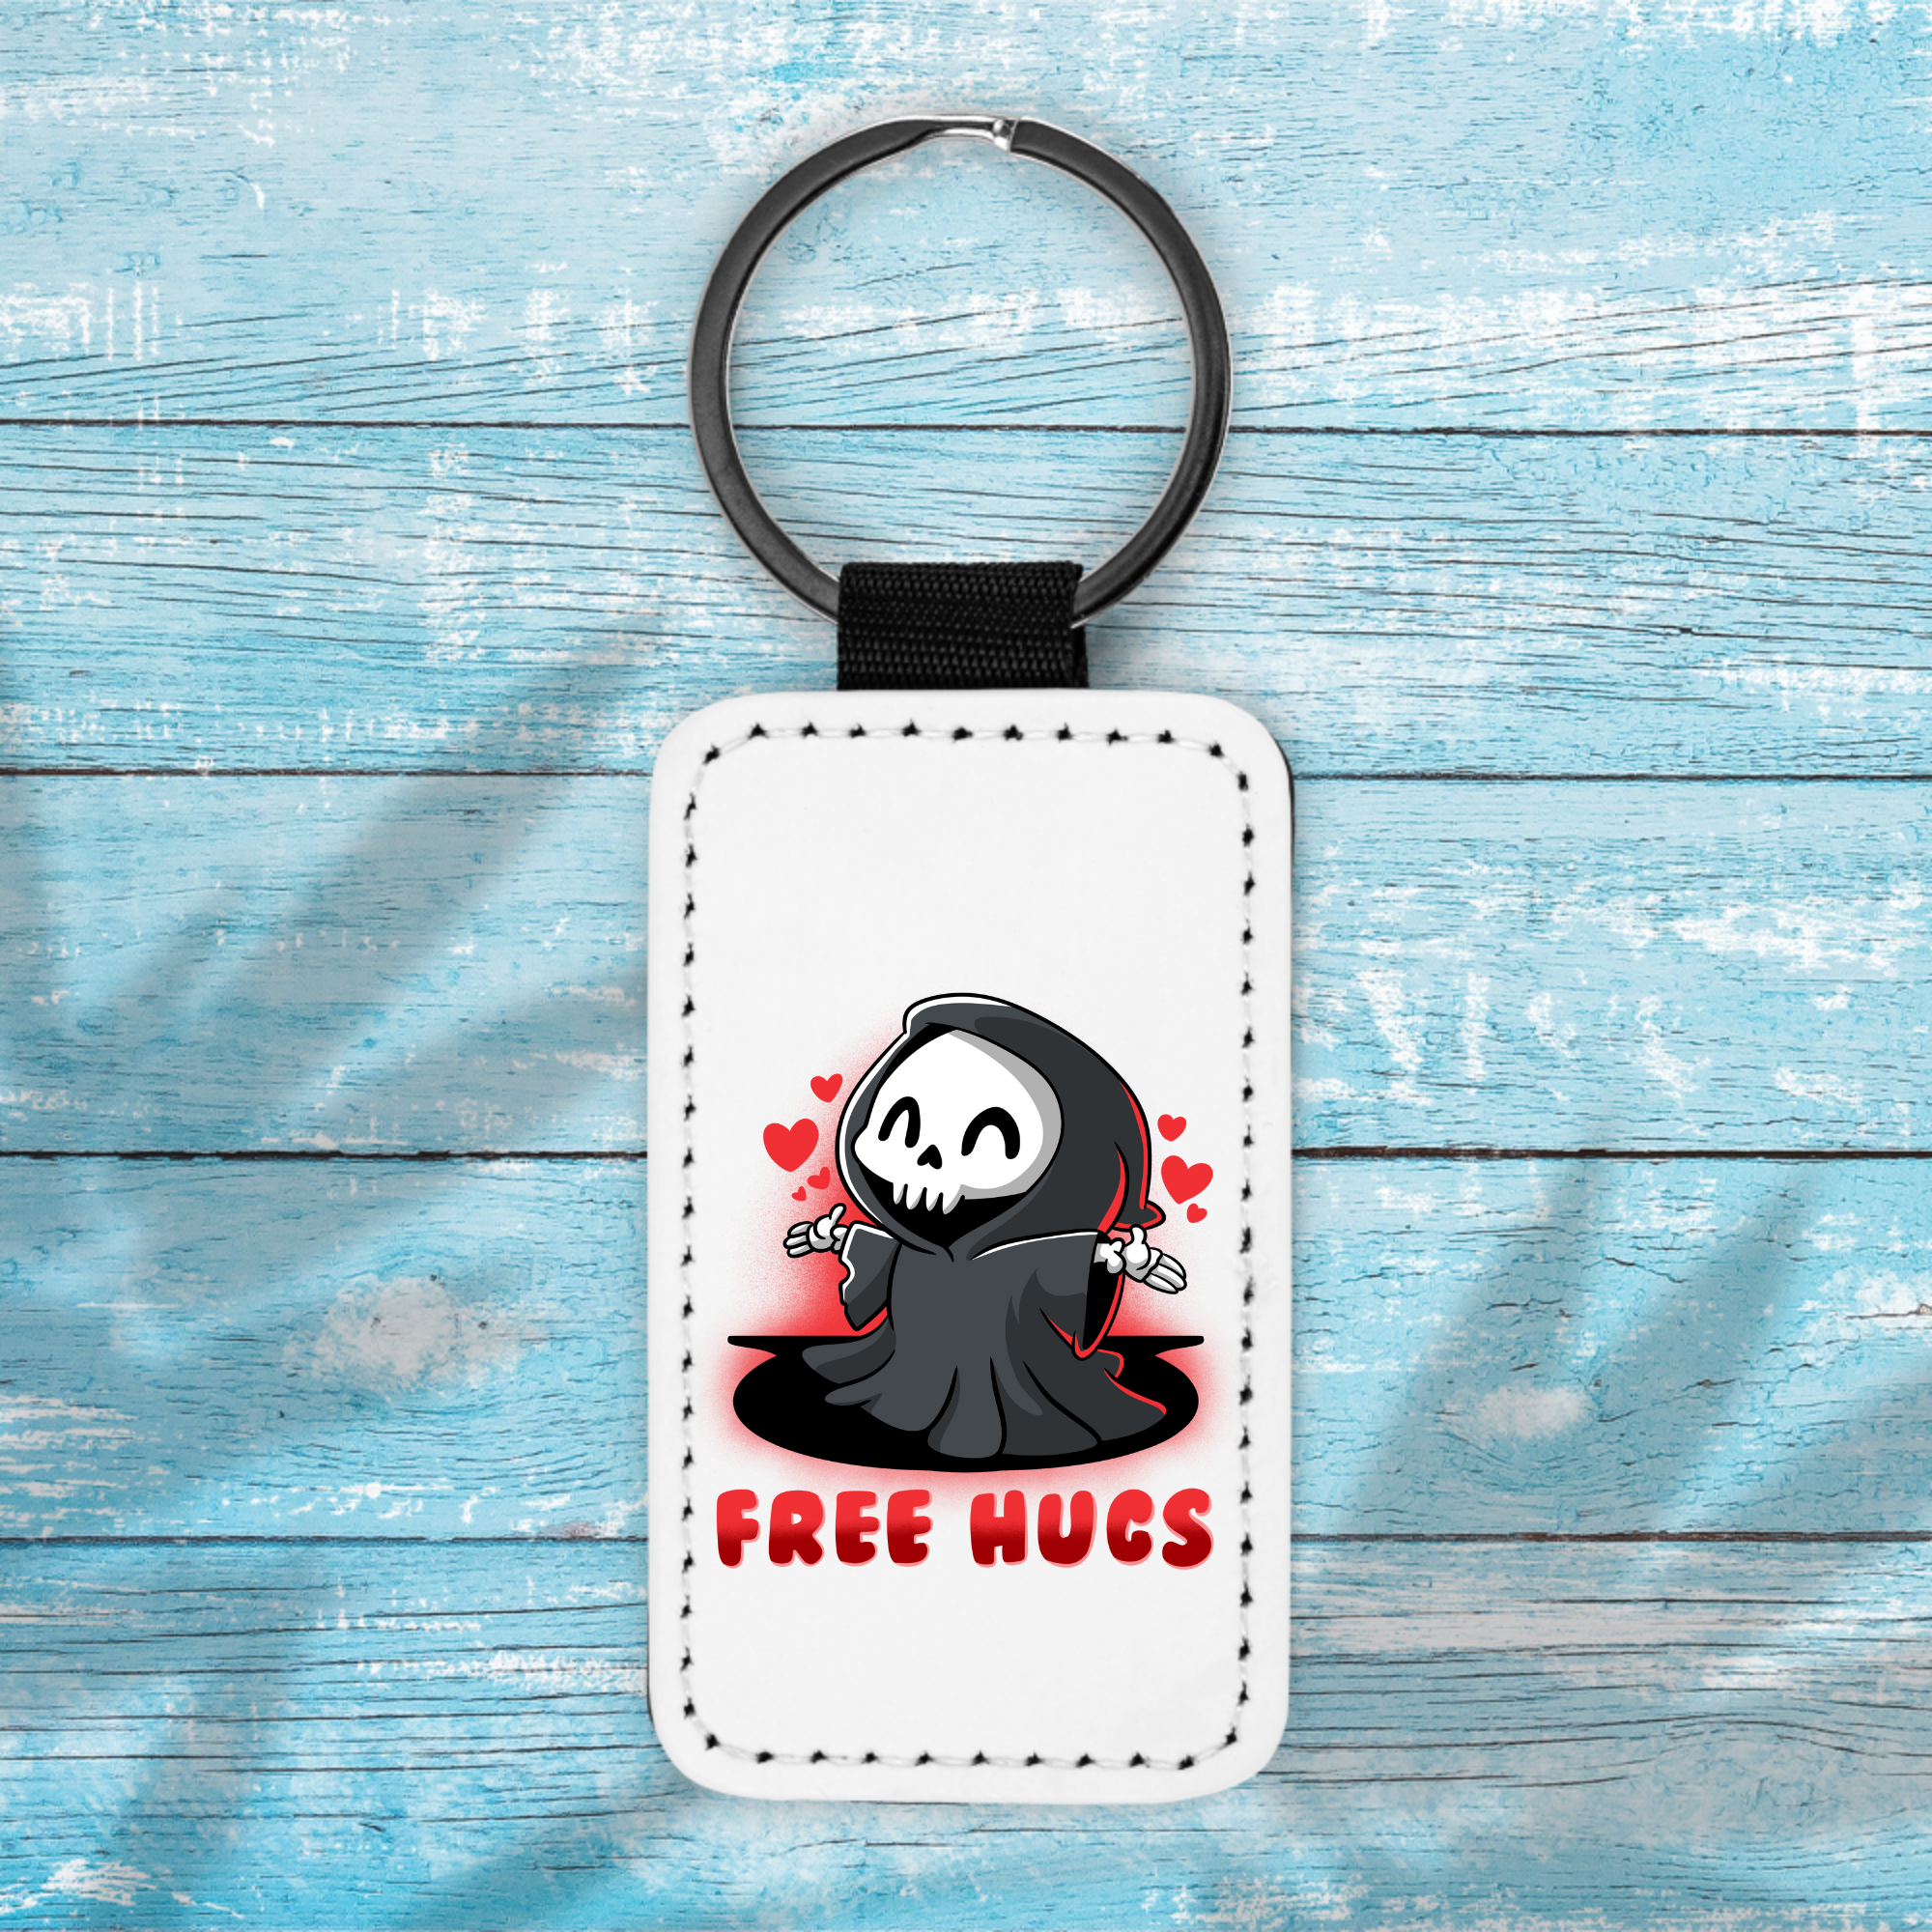 Free Hugs - Key Chain